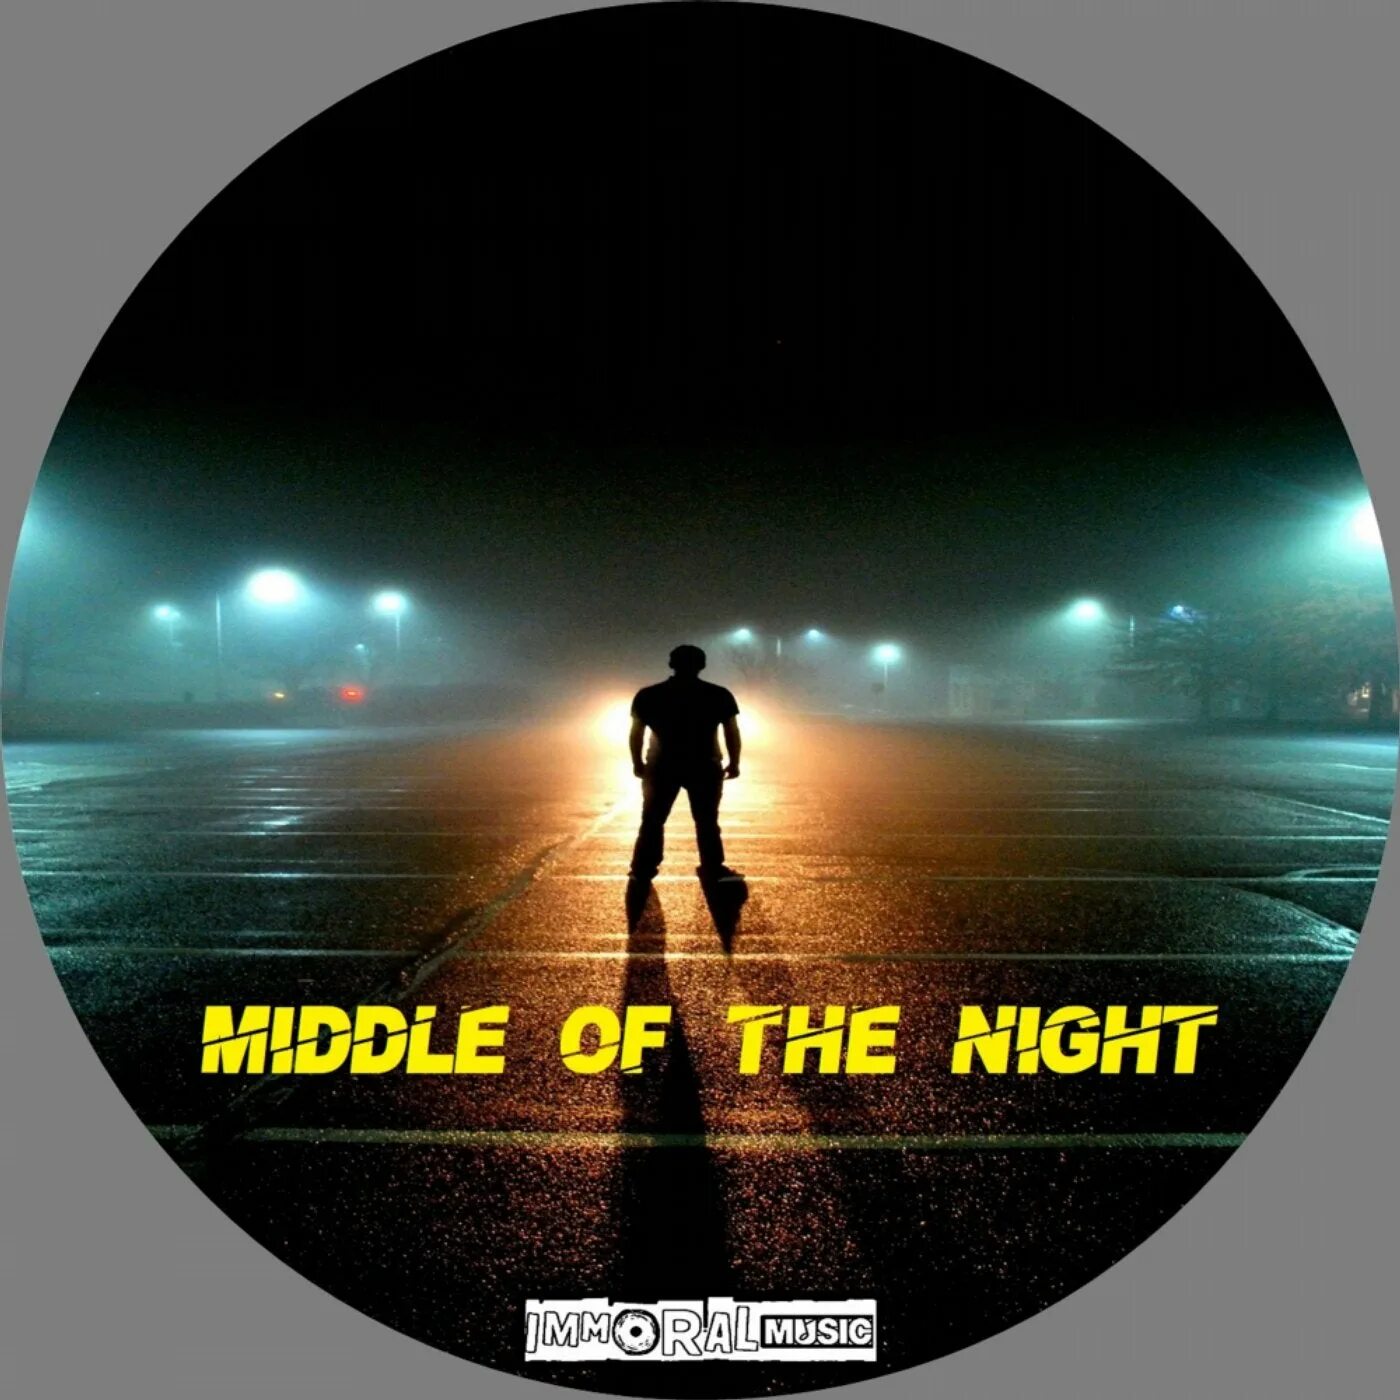 Middle of the night mp3. Middle of the Night. Middle of the Night обложка. In the Middle of the Night картинки. Трек Middle of the Night.